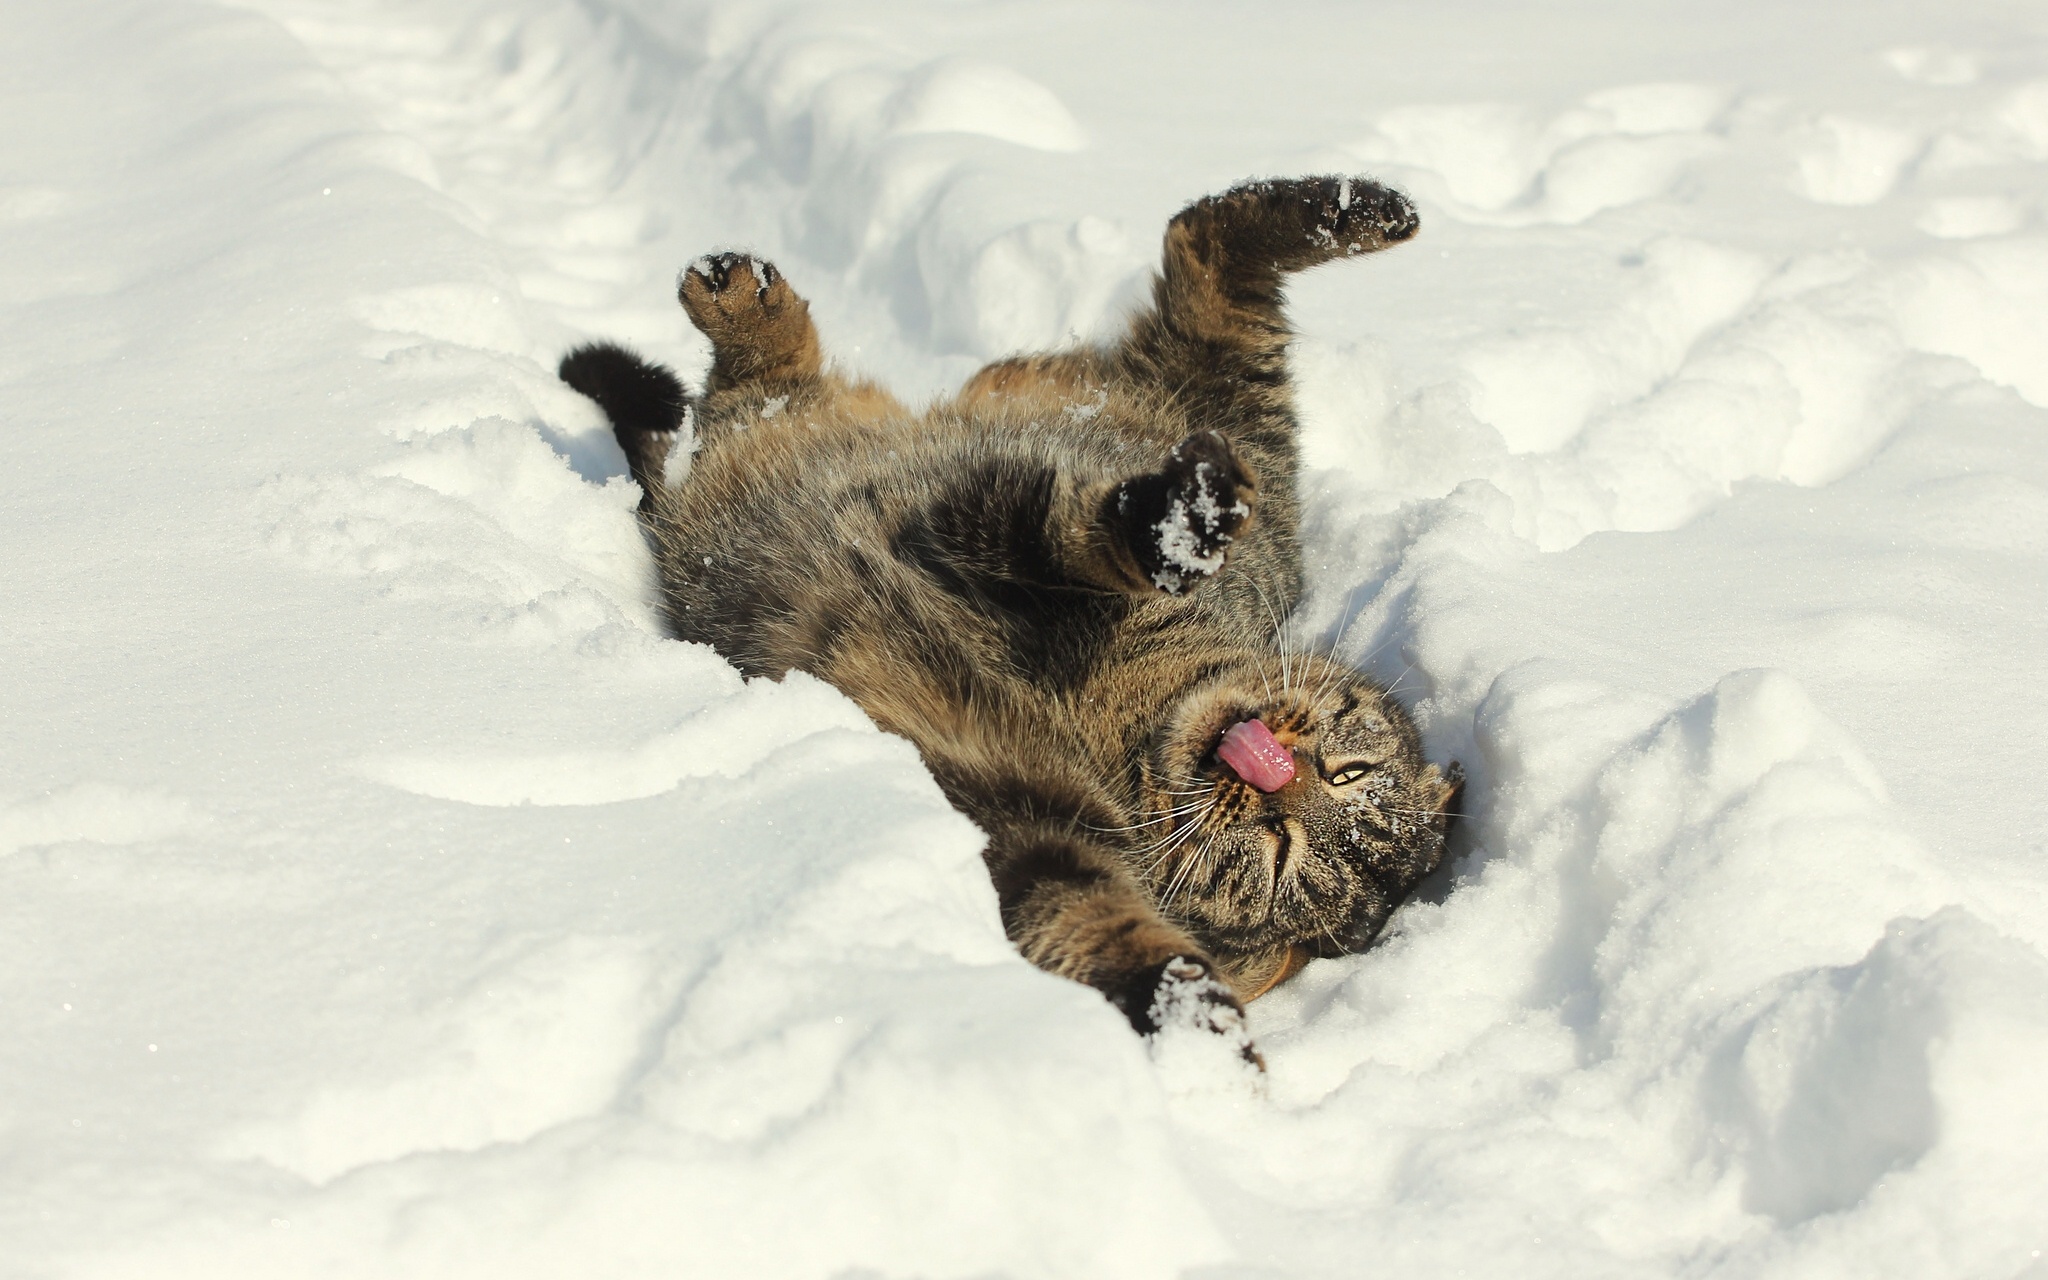 Cat snow winter mood wallpaper 2048x1280 125279 WallpaperUP 2048x1280